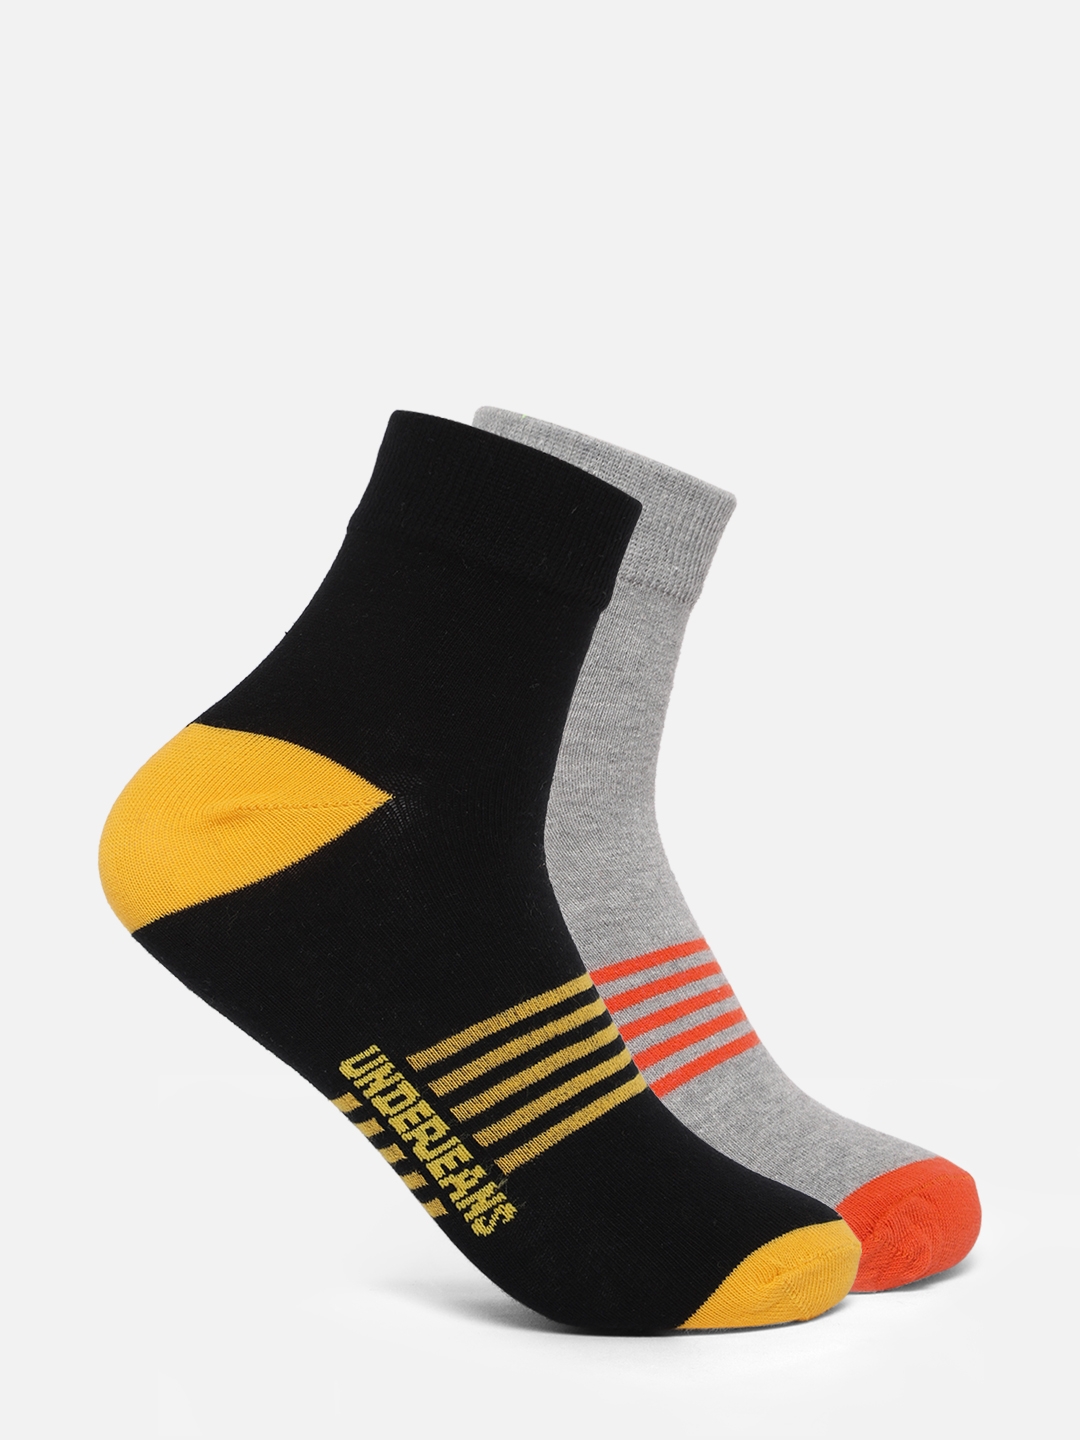 spykar | Underjeans Men Assorted Ankle length (Non terry) Socks Pack of 2